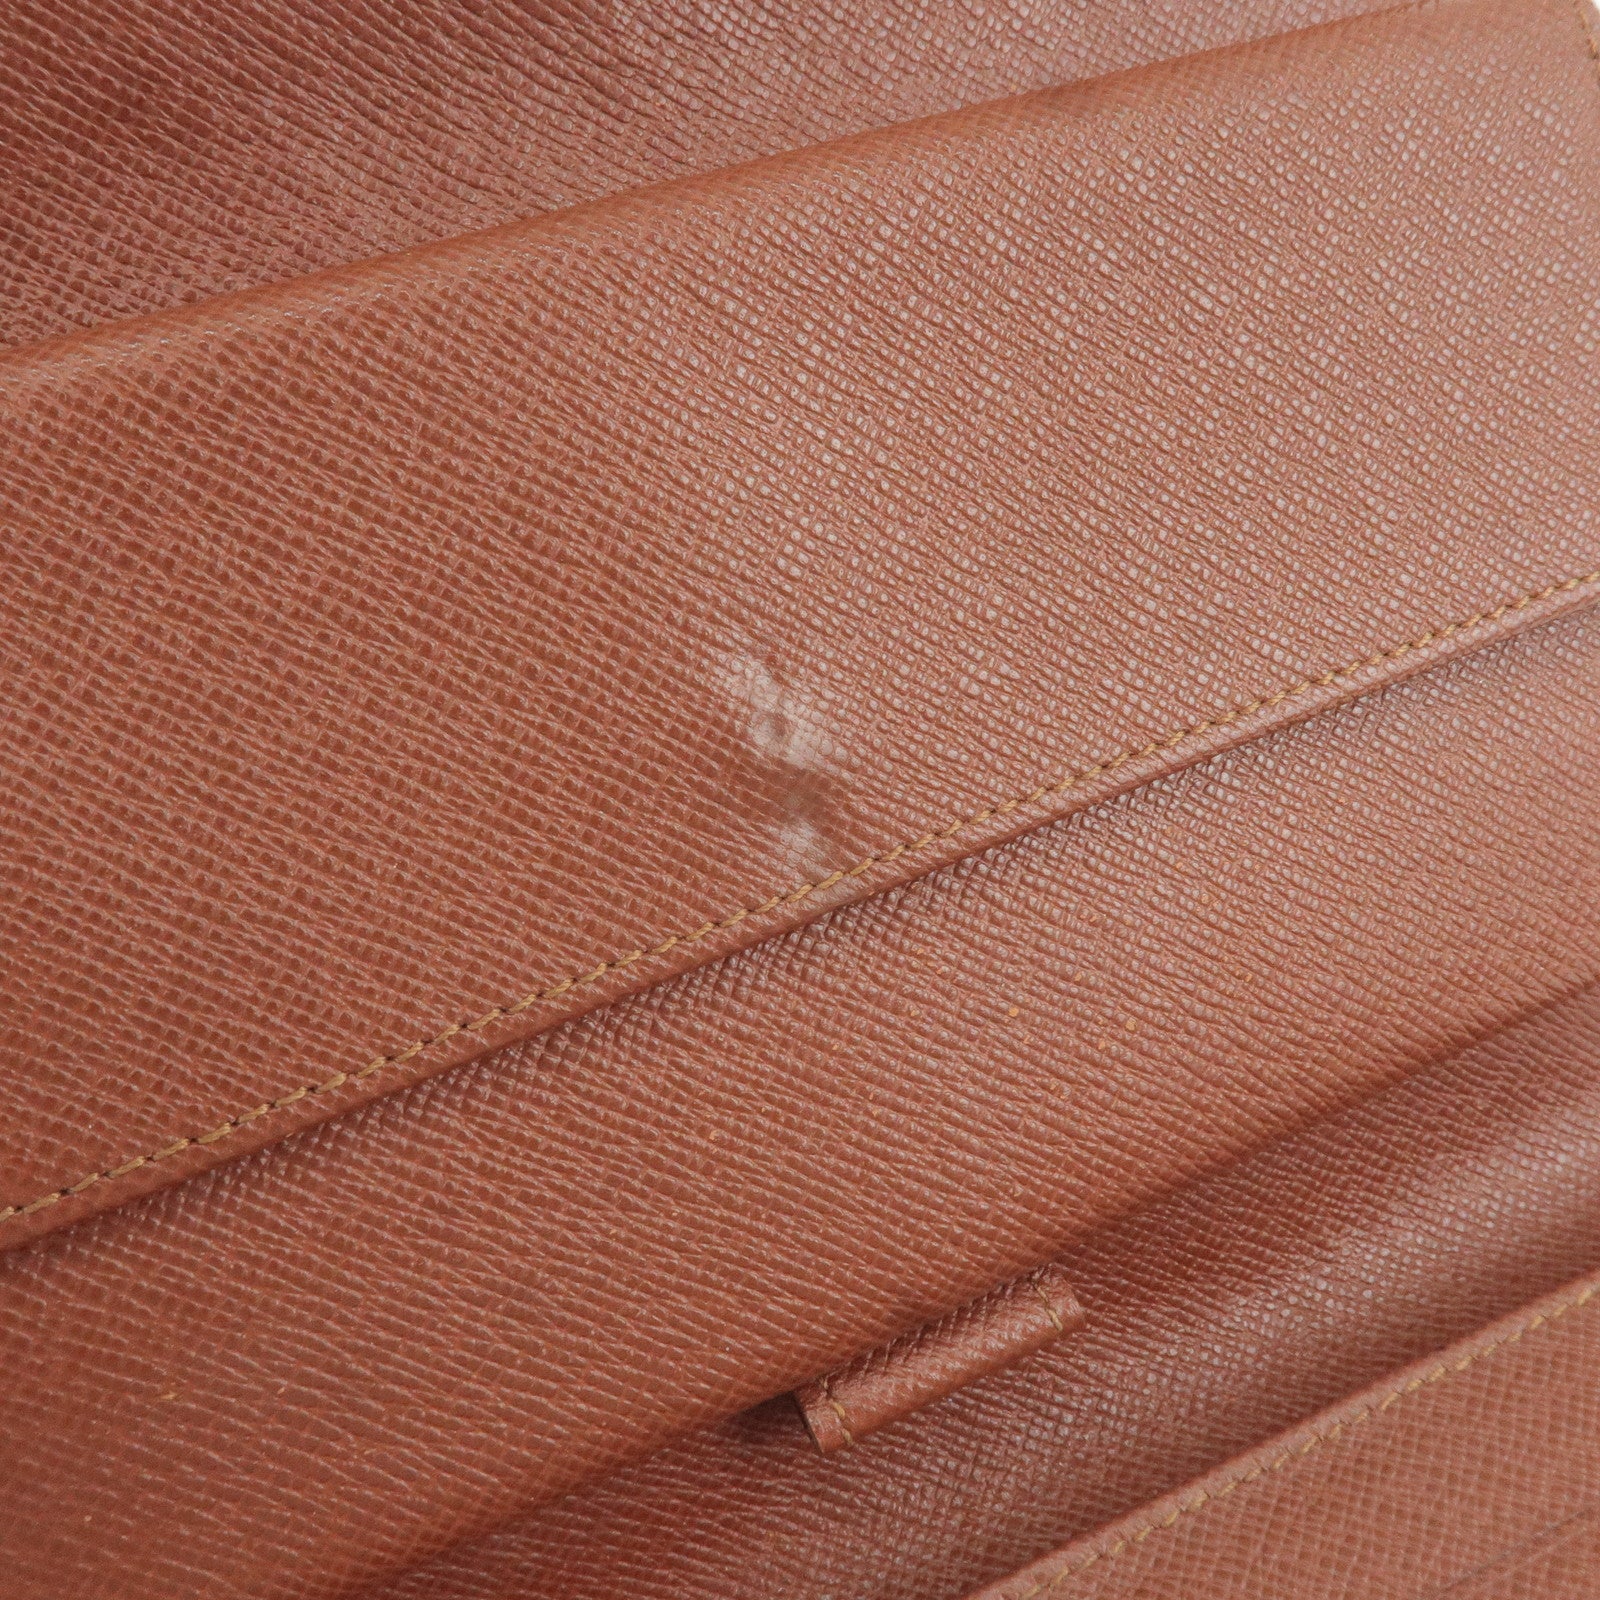 M61215 – dct - Porte - Borsa Louis Vuitton Houston in pelle verniciata  monogram dorata e pelle naturale - Monogram - ep_vintage luxury Store -  Vuitton - International - Wallet - Louis - Tresor